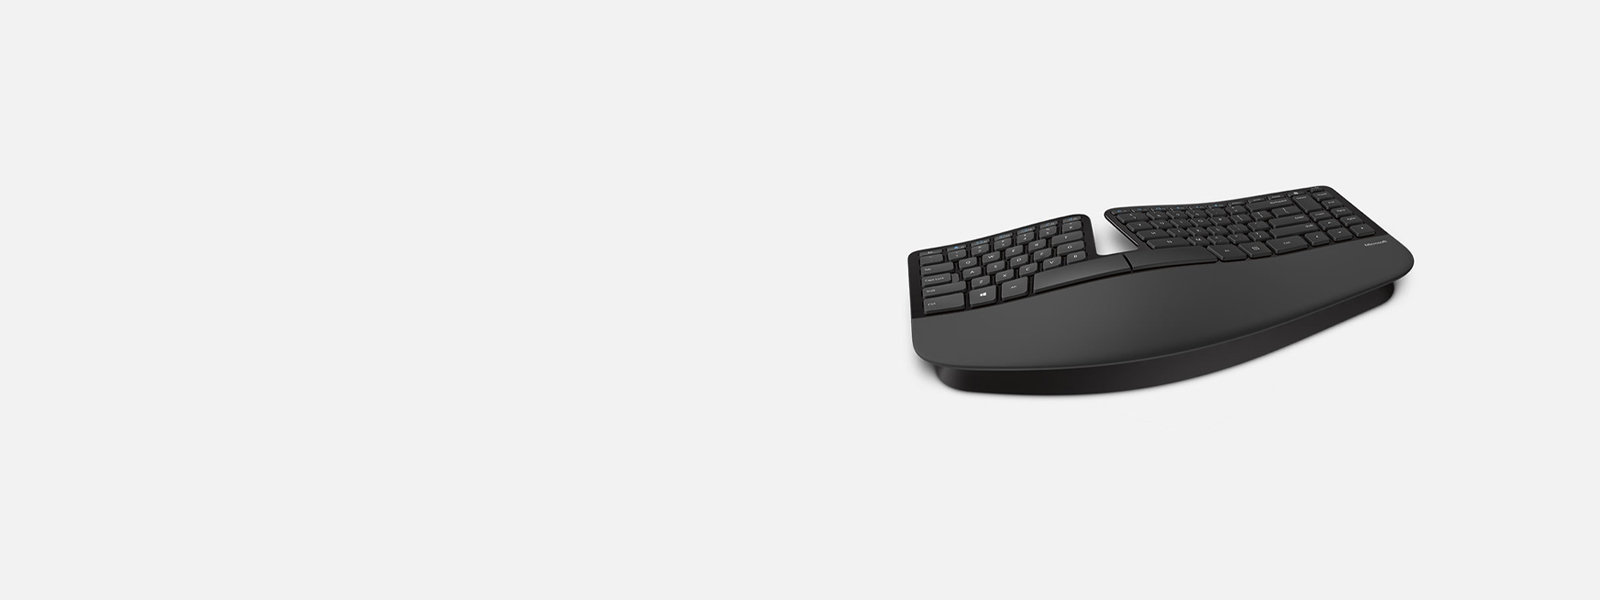 Sculpt Ergonomic Keyboard for Microsoft Business Accessories Business 